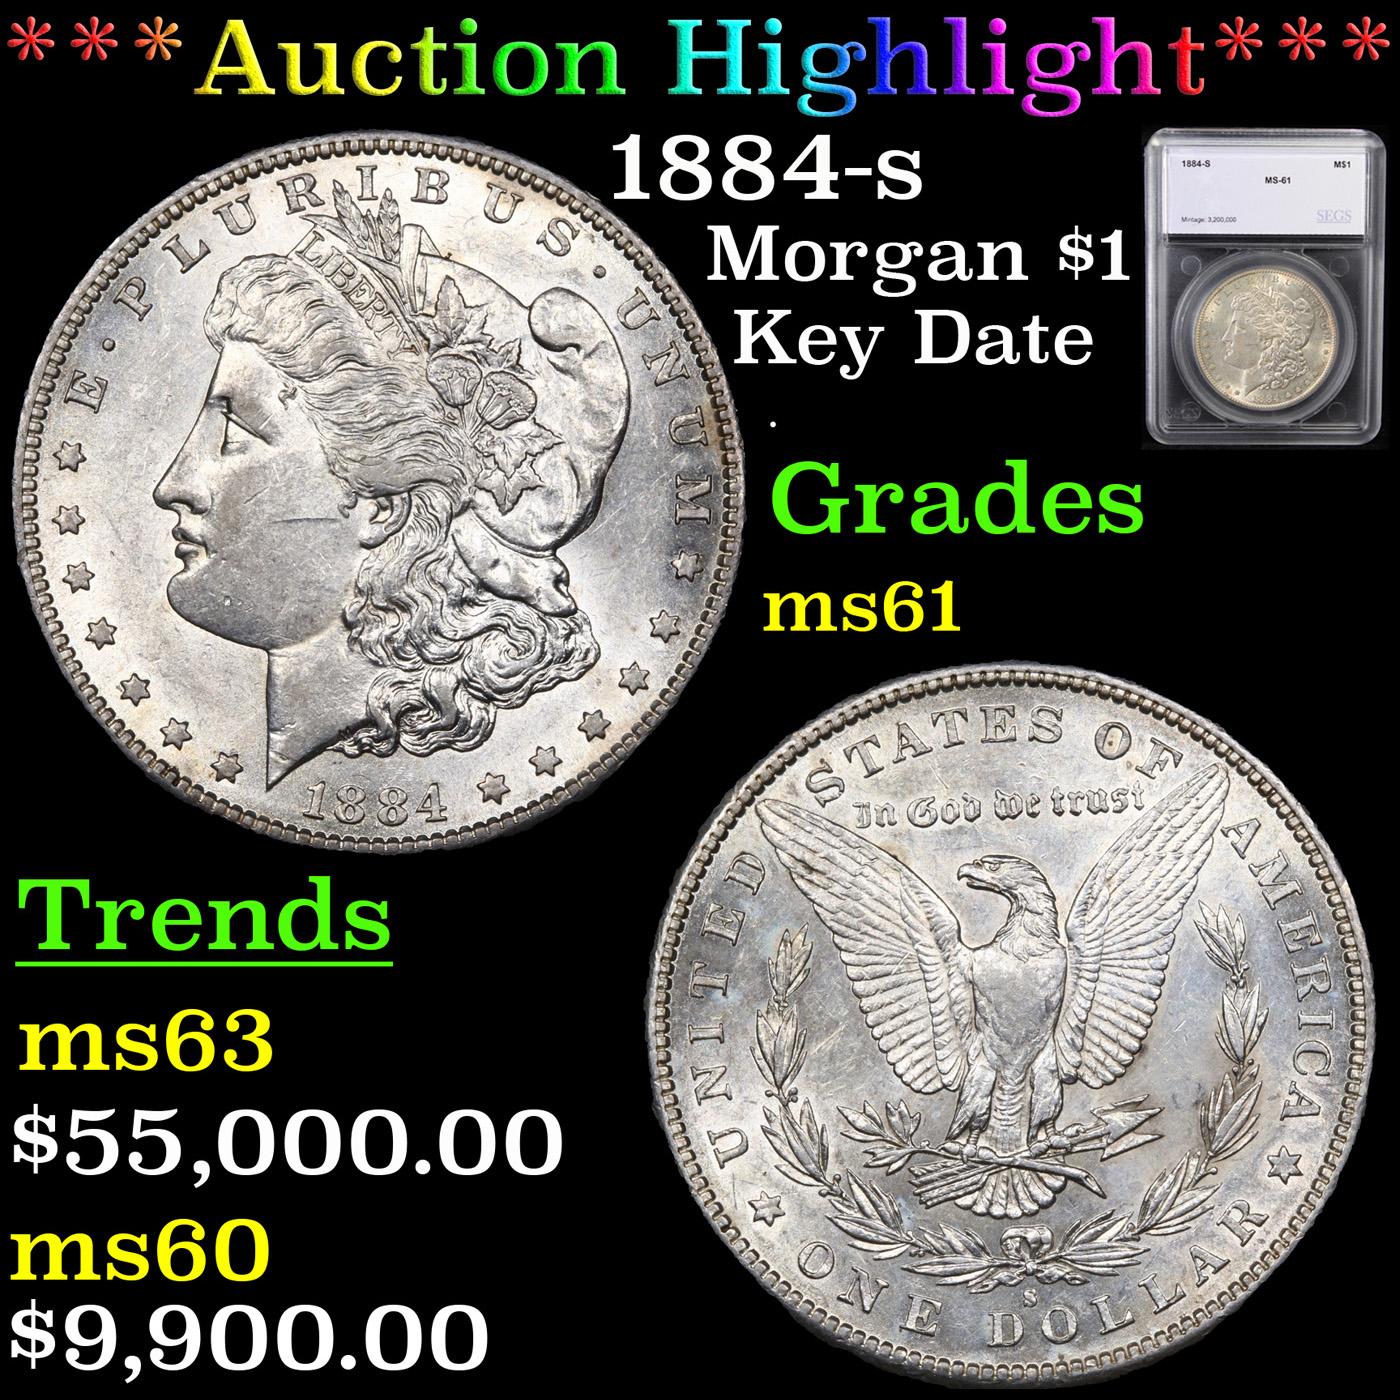 ***Auction Highlight*** 1884-s Morgan Dollar $1 Graded ms61 By SEGS (fc)